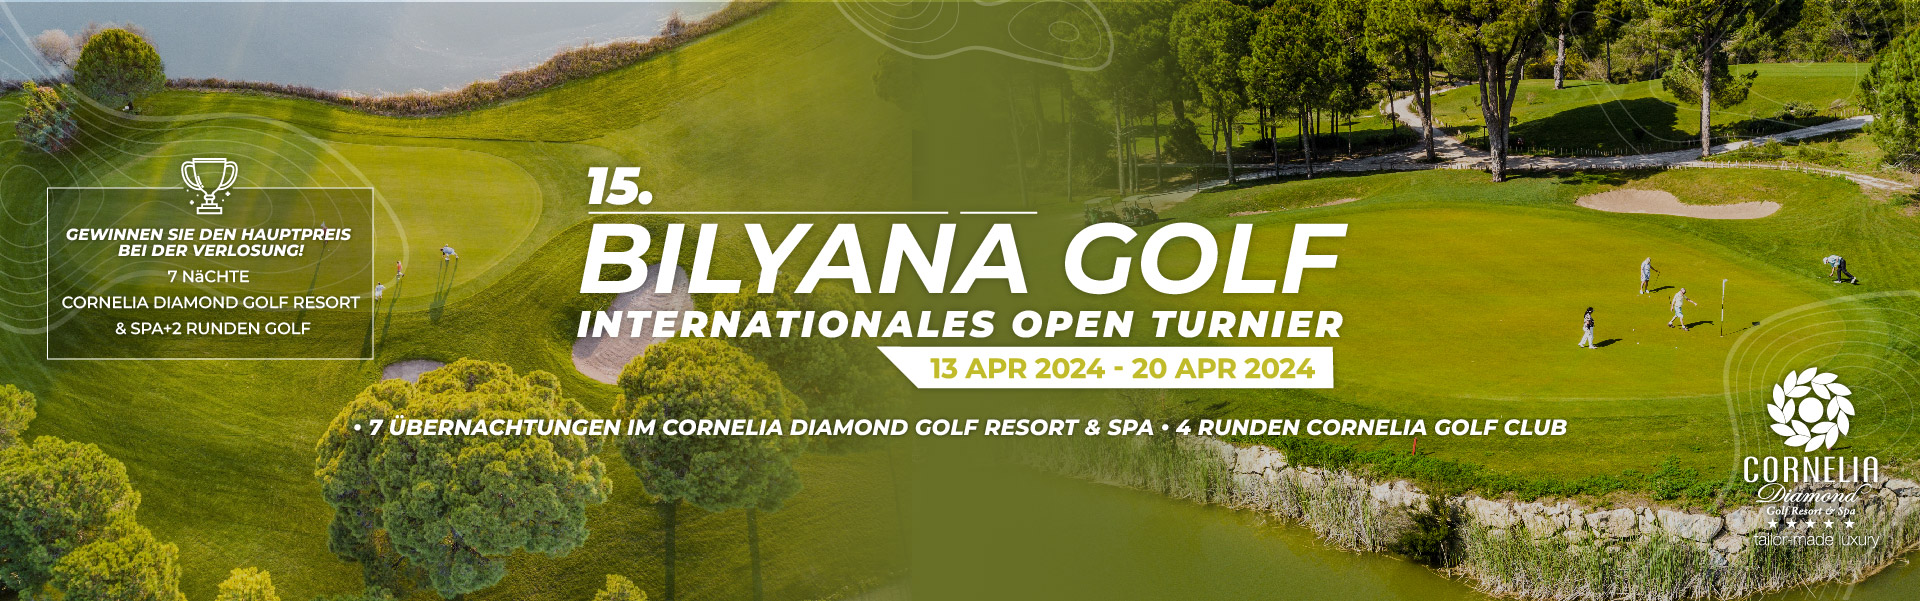 Bilyana Golf - 15. BILYANA GOLF INTERNATIONALES OPEN TURNIER